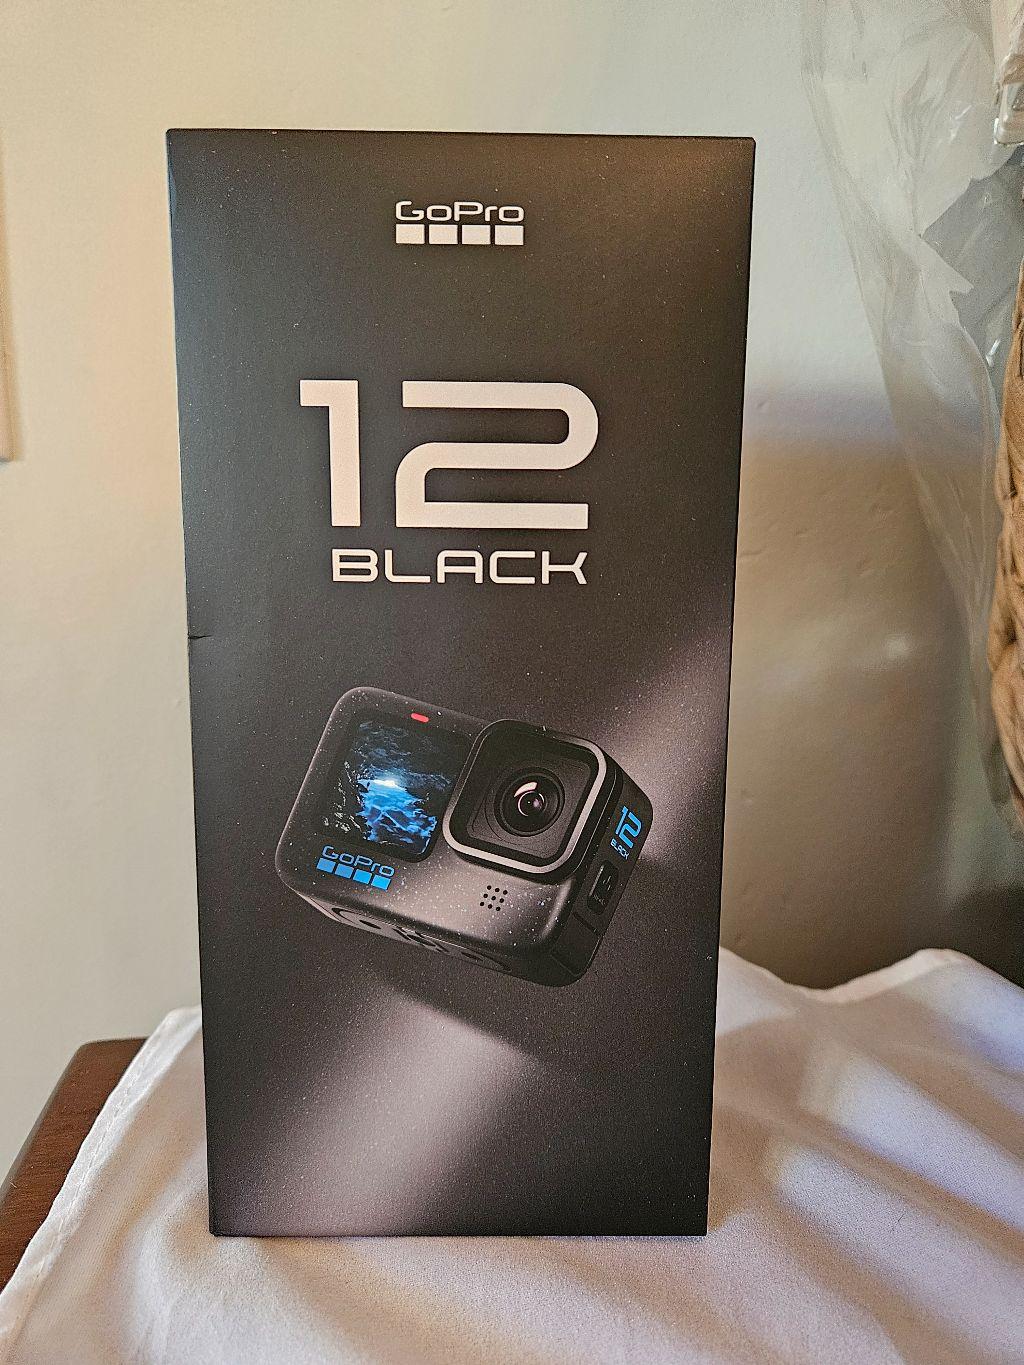 Go Pro - New Hero12 Black Camera!